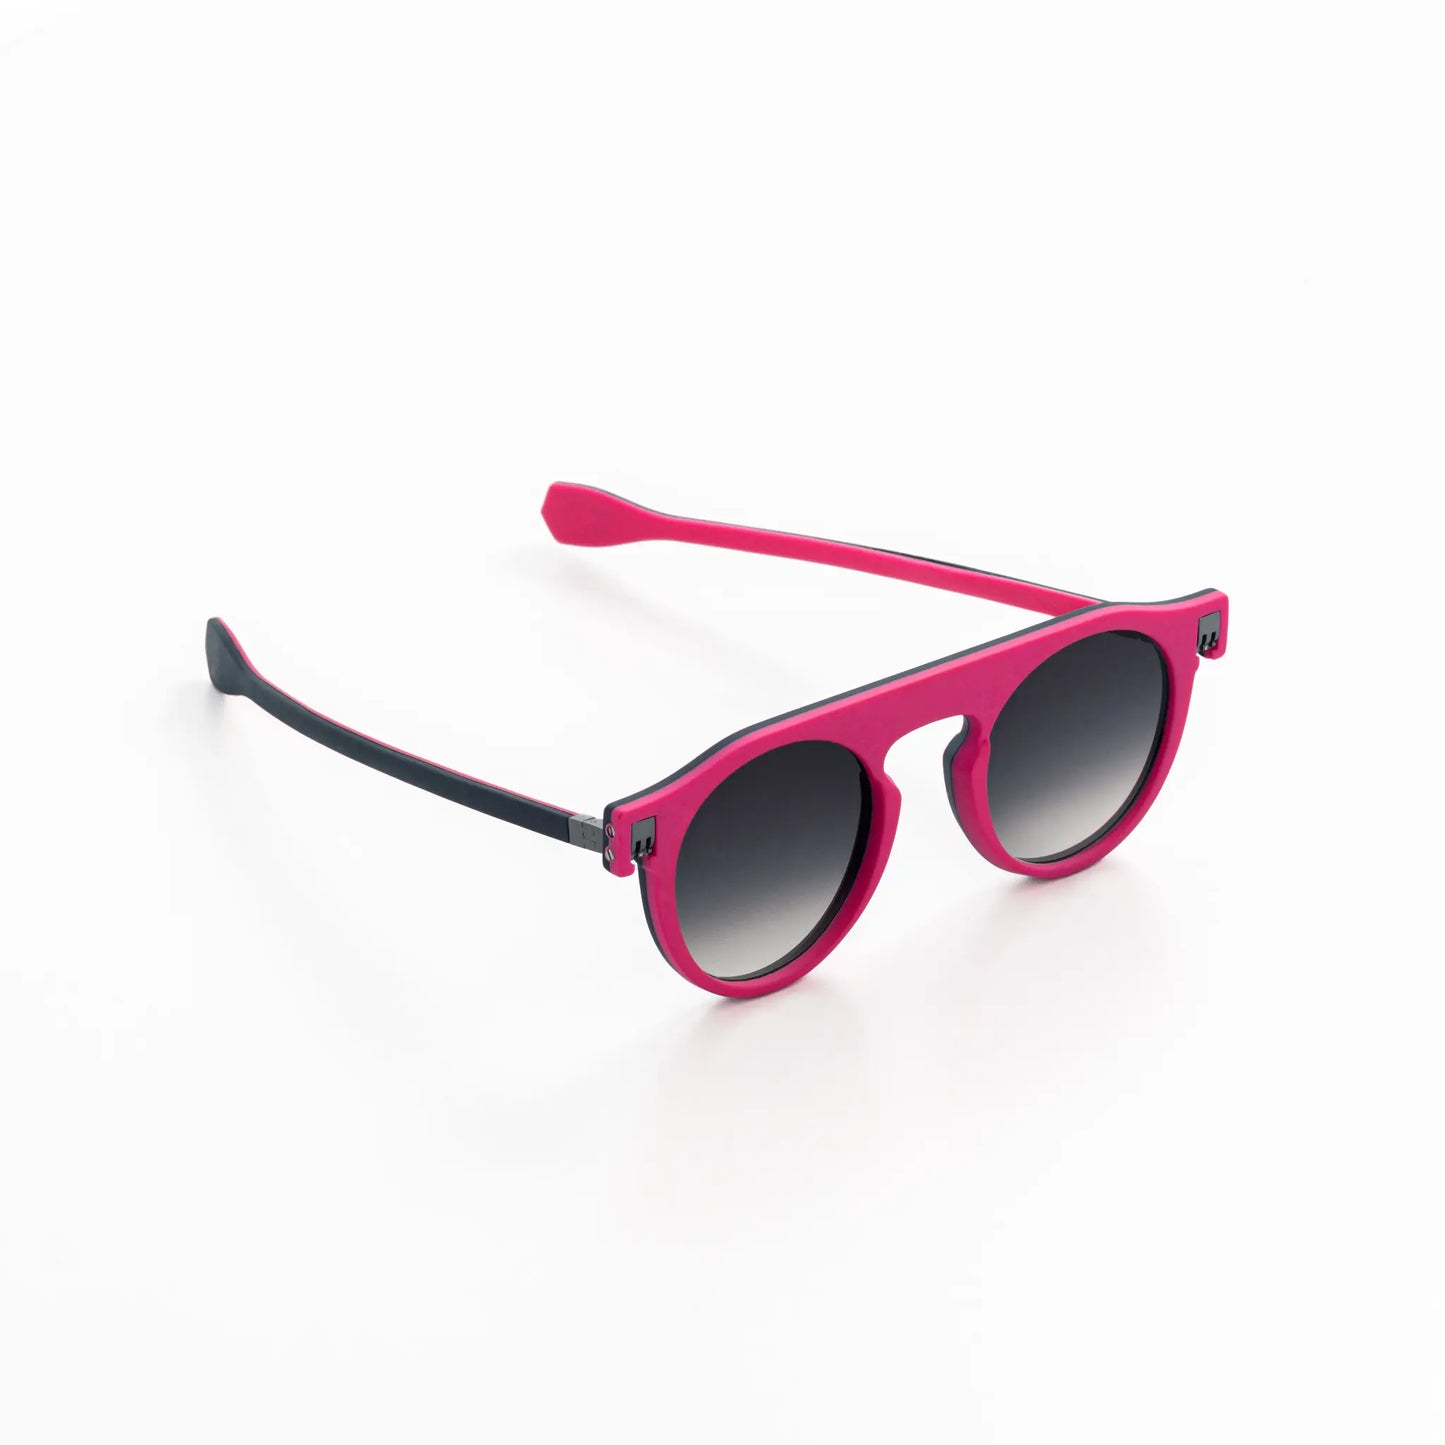 Reverso sunglasses black & pink reversible & ultra light side view 2